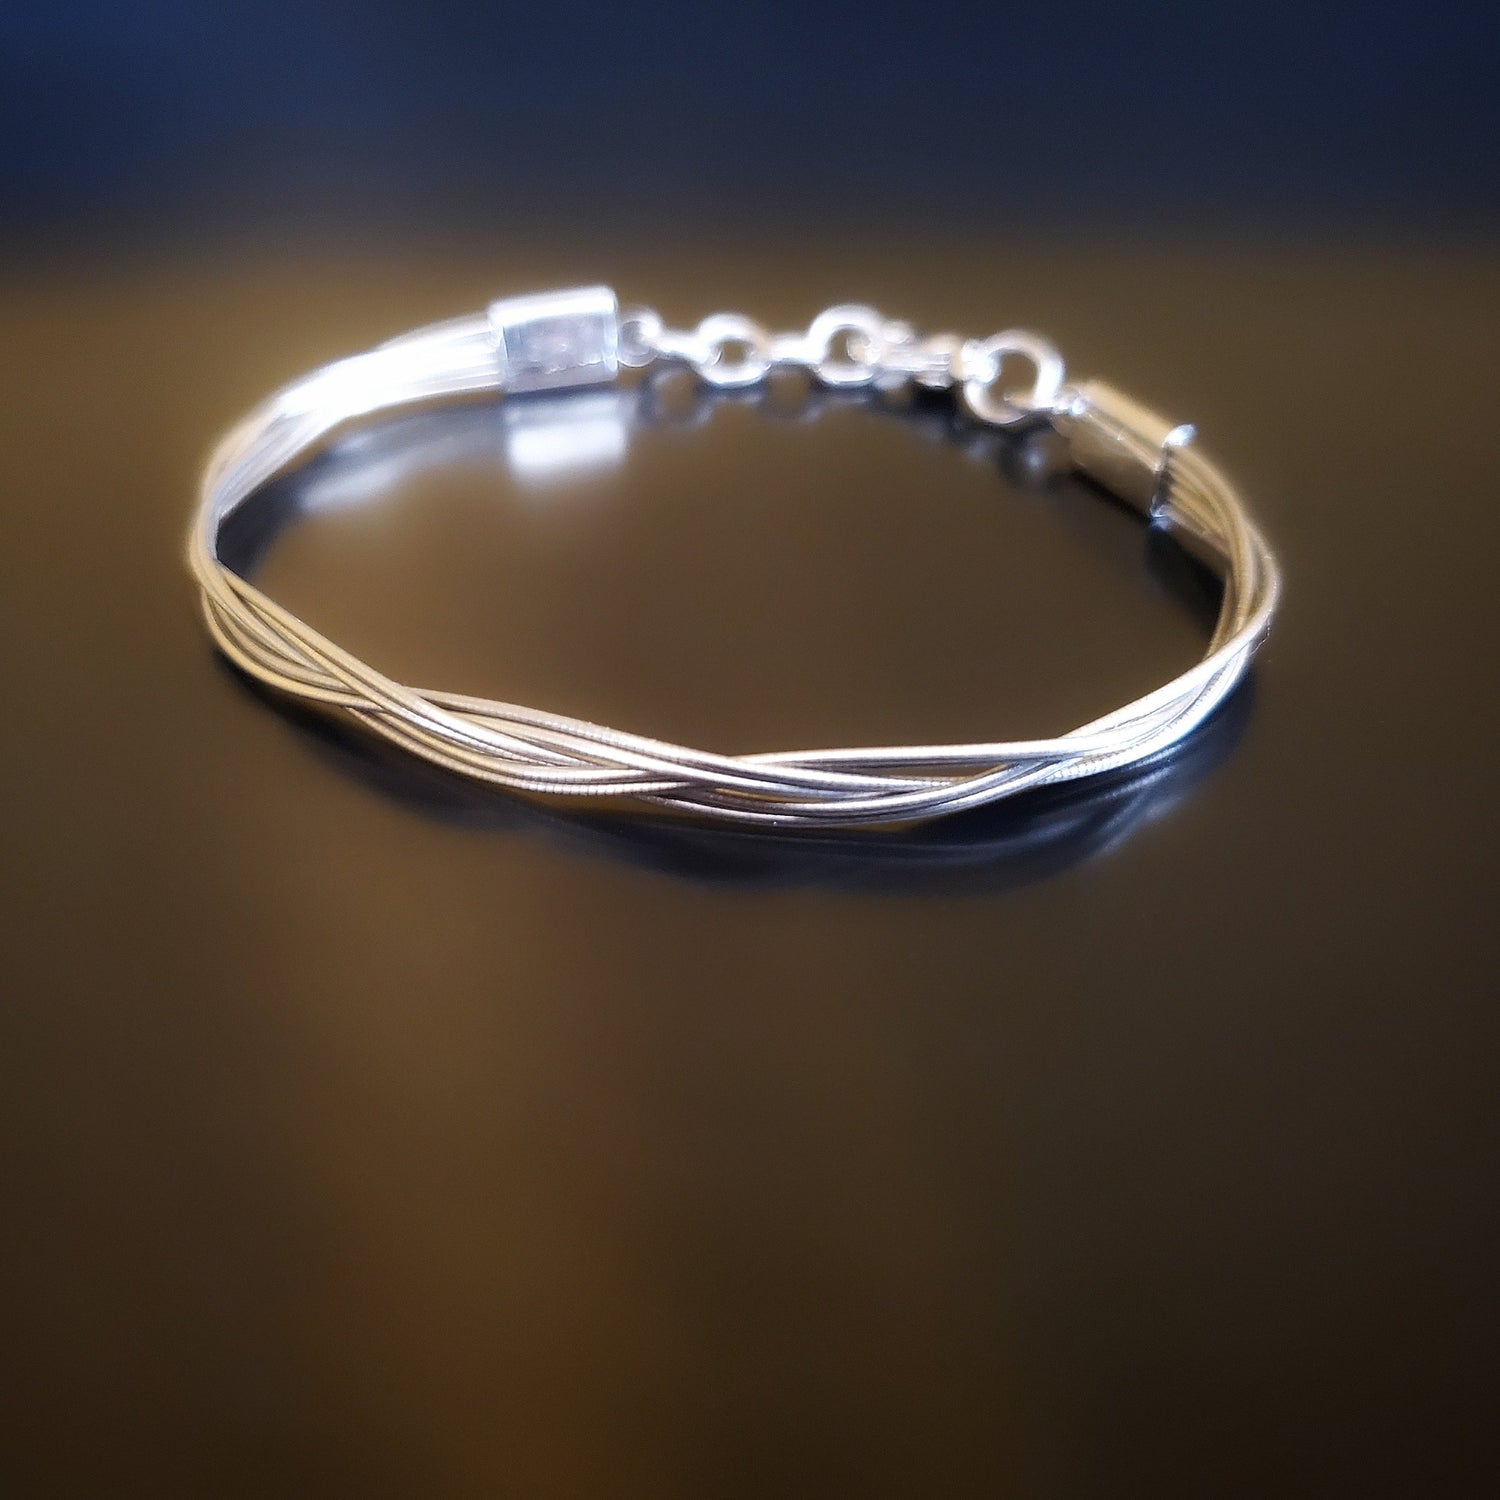 upcycled cello string unisex silver bracelet black background